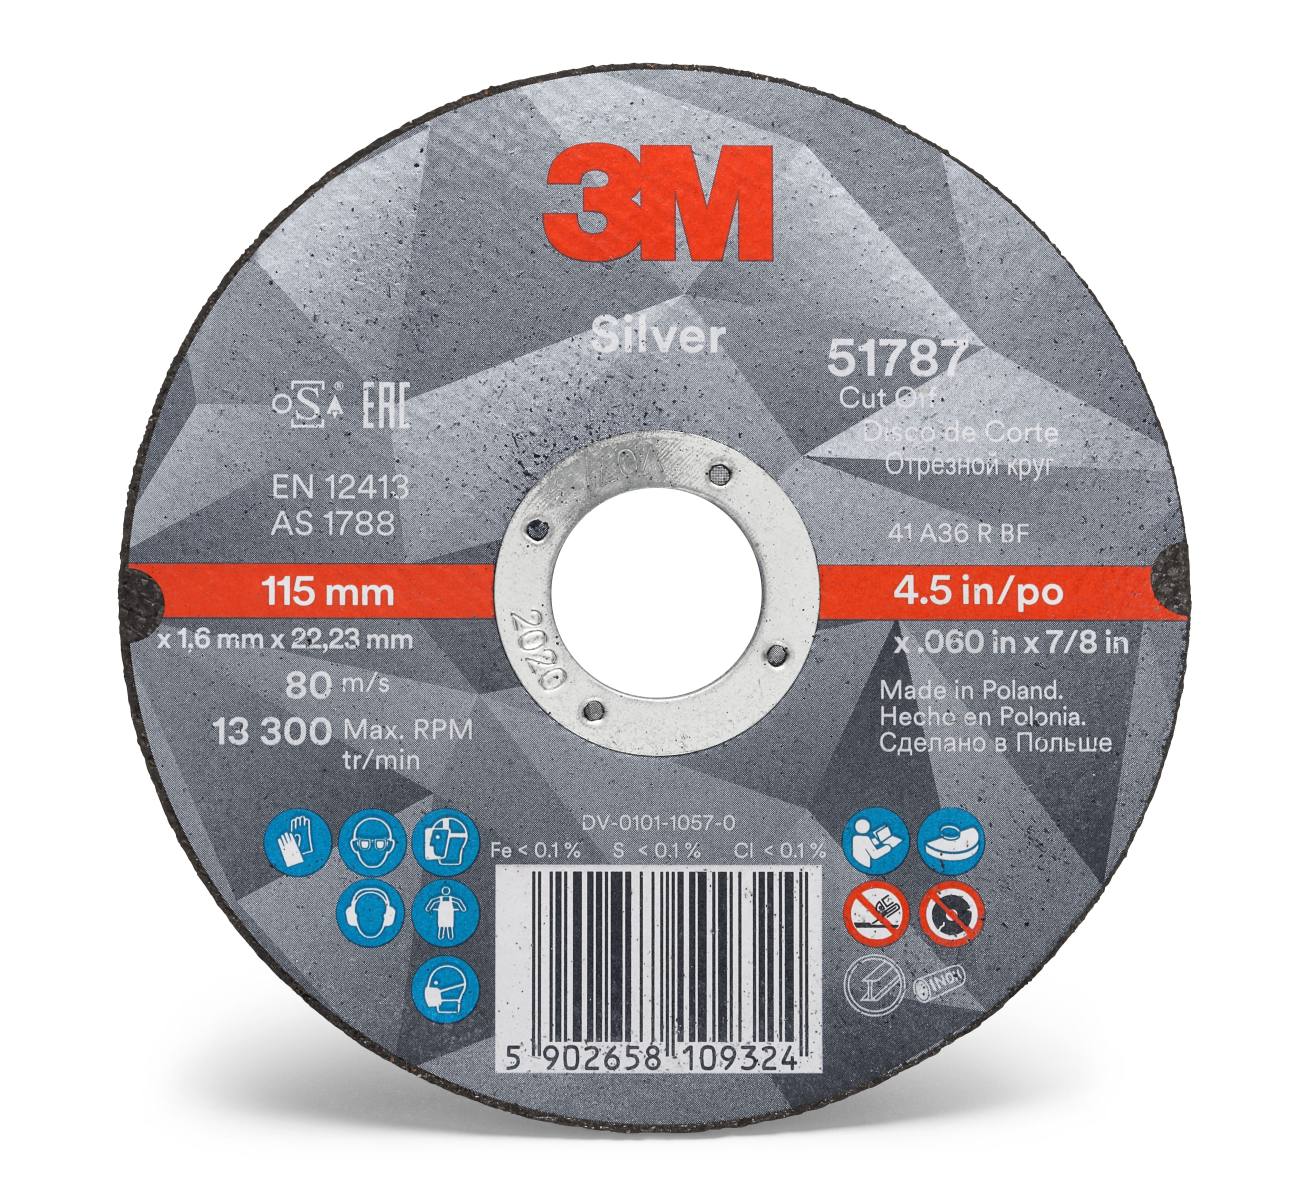 Disco da taglio 3M Silver Cut-Off, 100 mm, 1,3 mm, 16 mm, T41, 51776